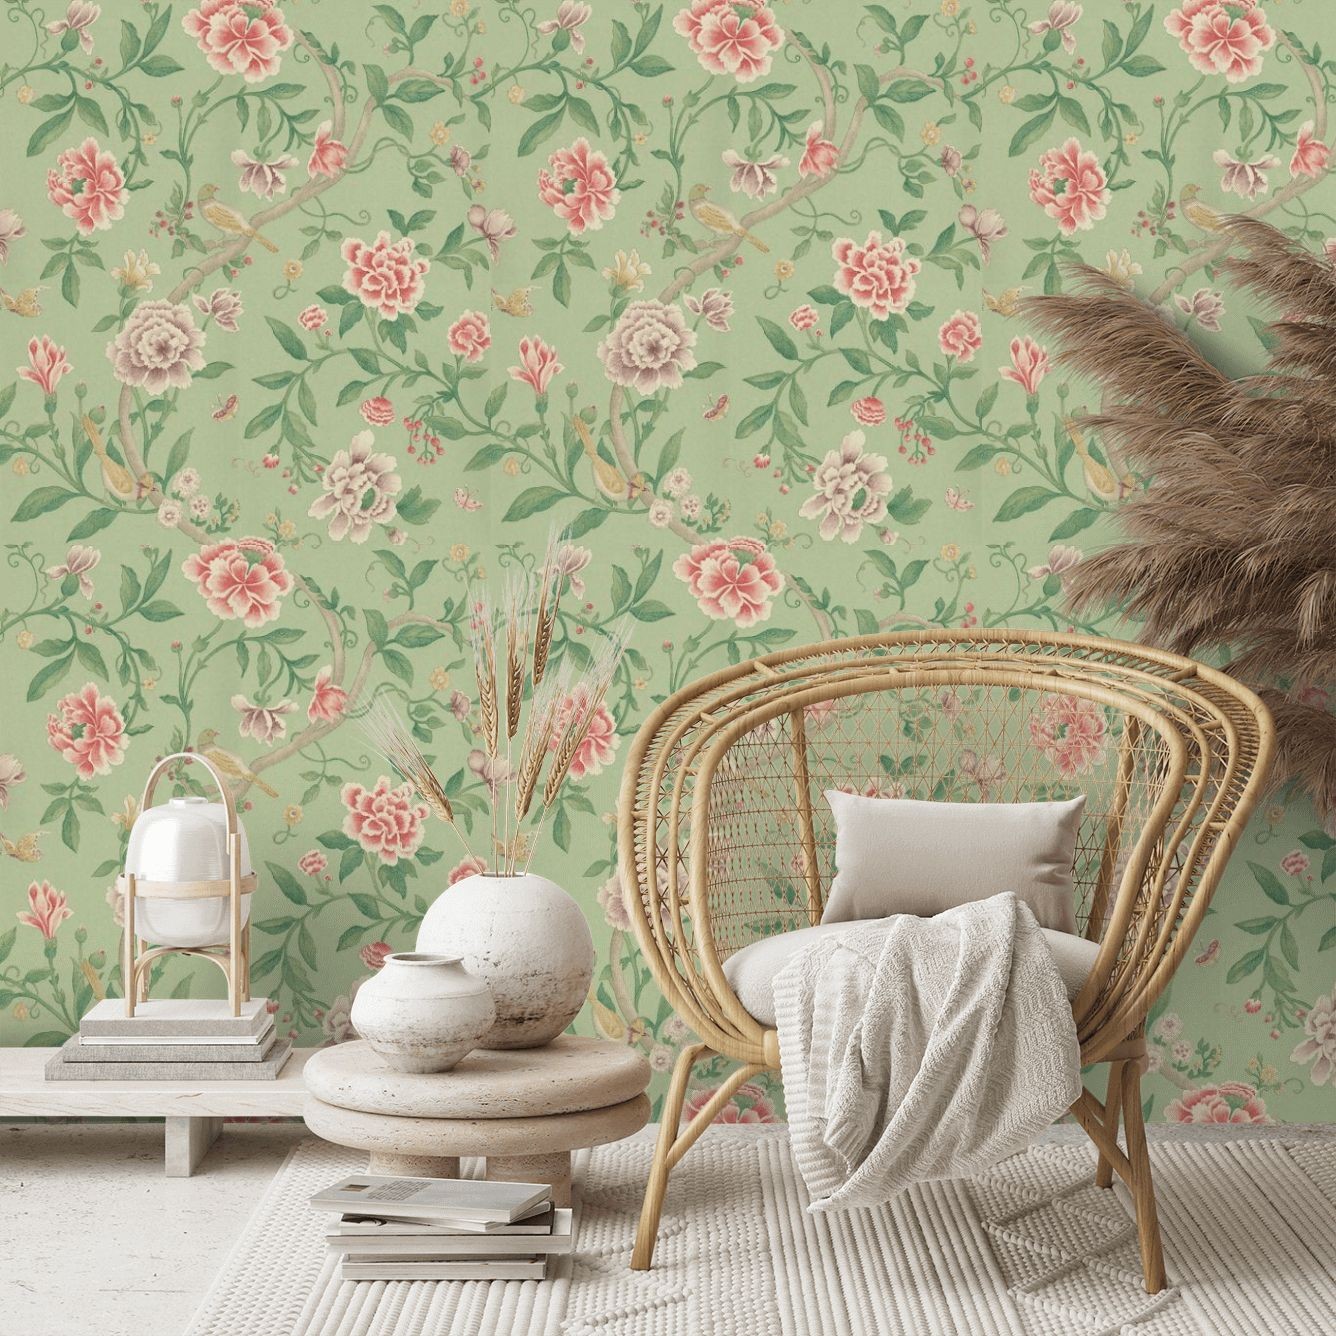 Porcelain Garden Wallpaper - Rose/Fennel - By Sanderson - DCAVPO101